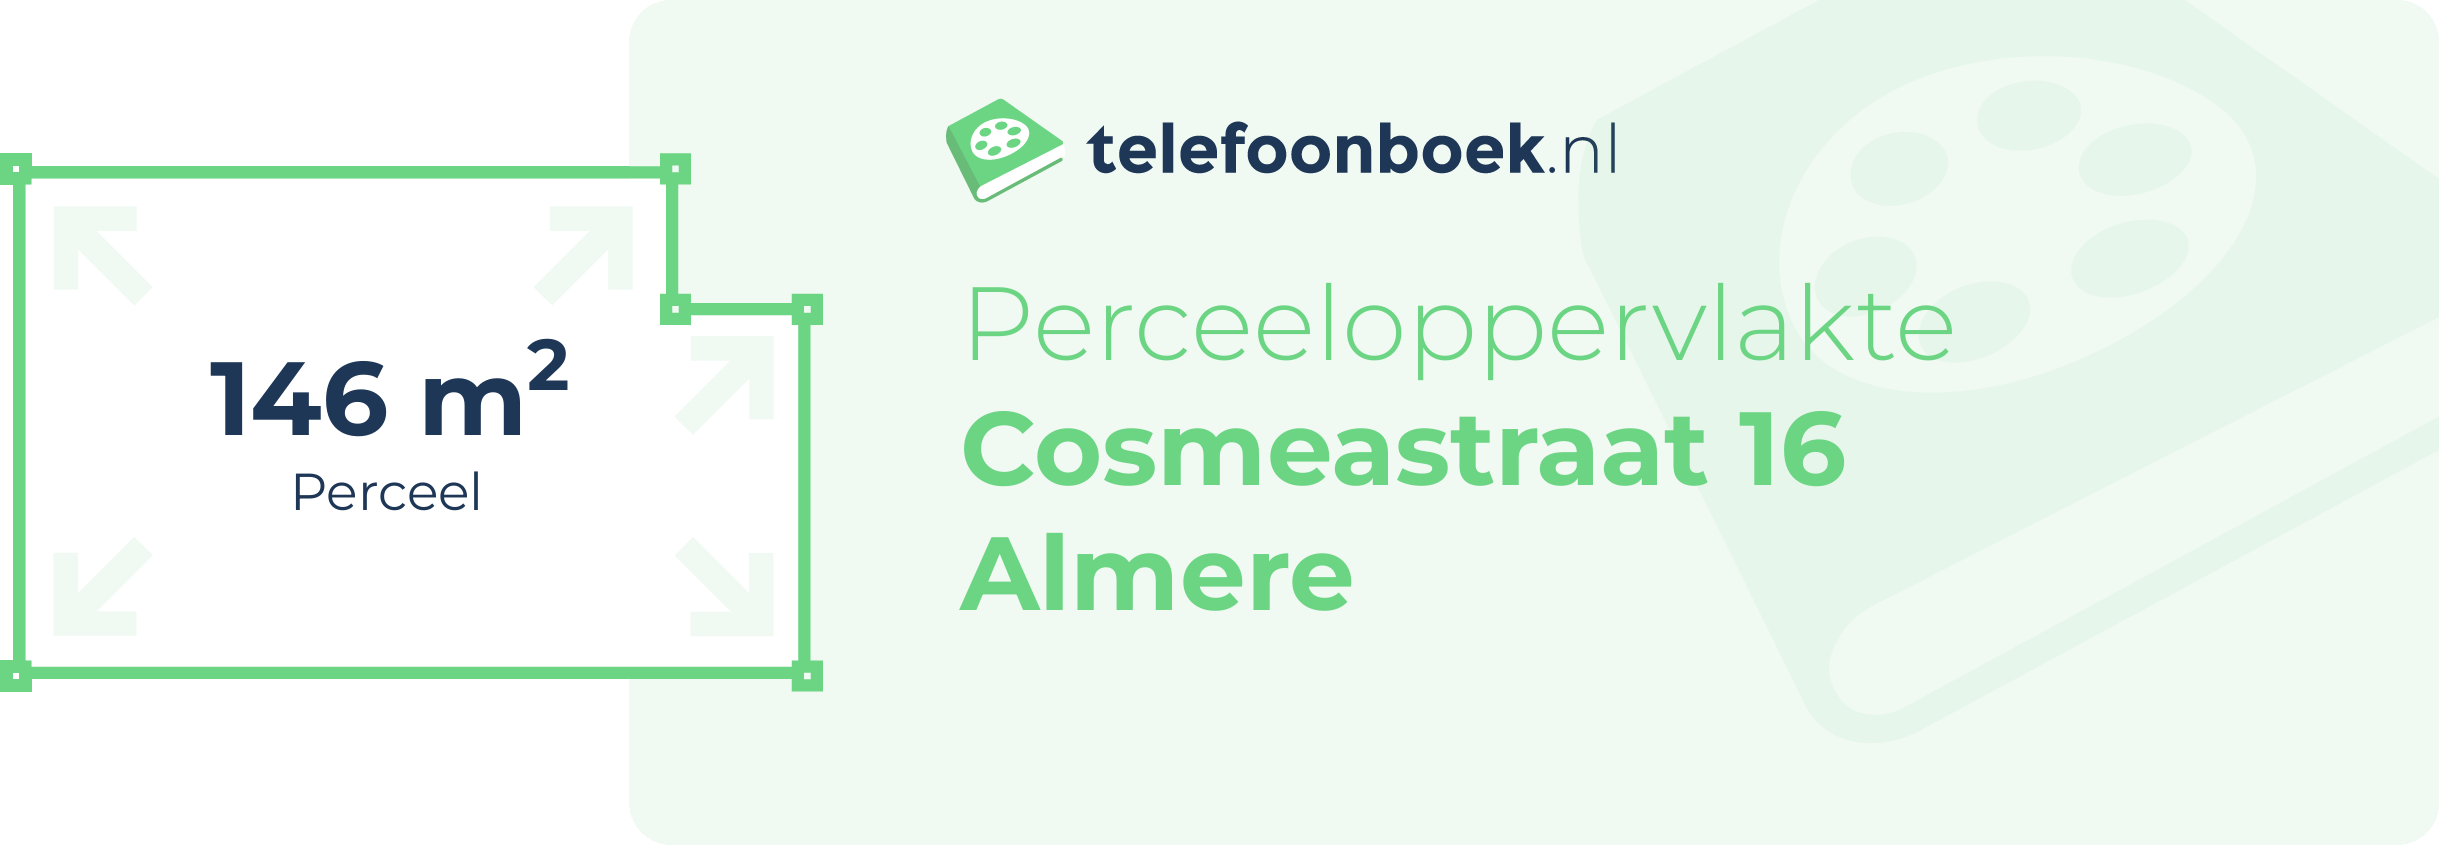 Perceeloppervlakte Cosmeastraat 16 Almere